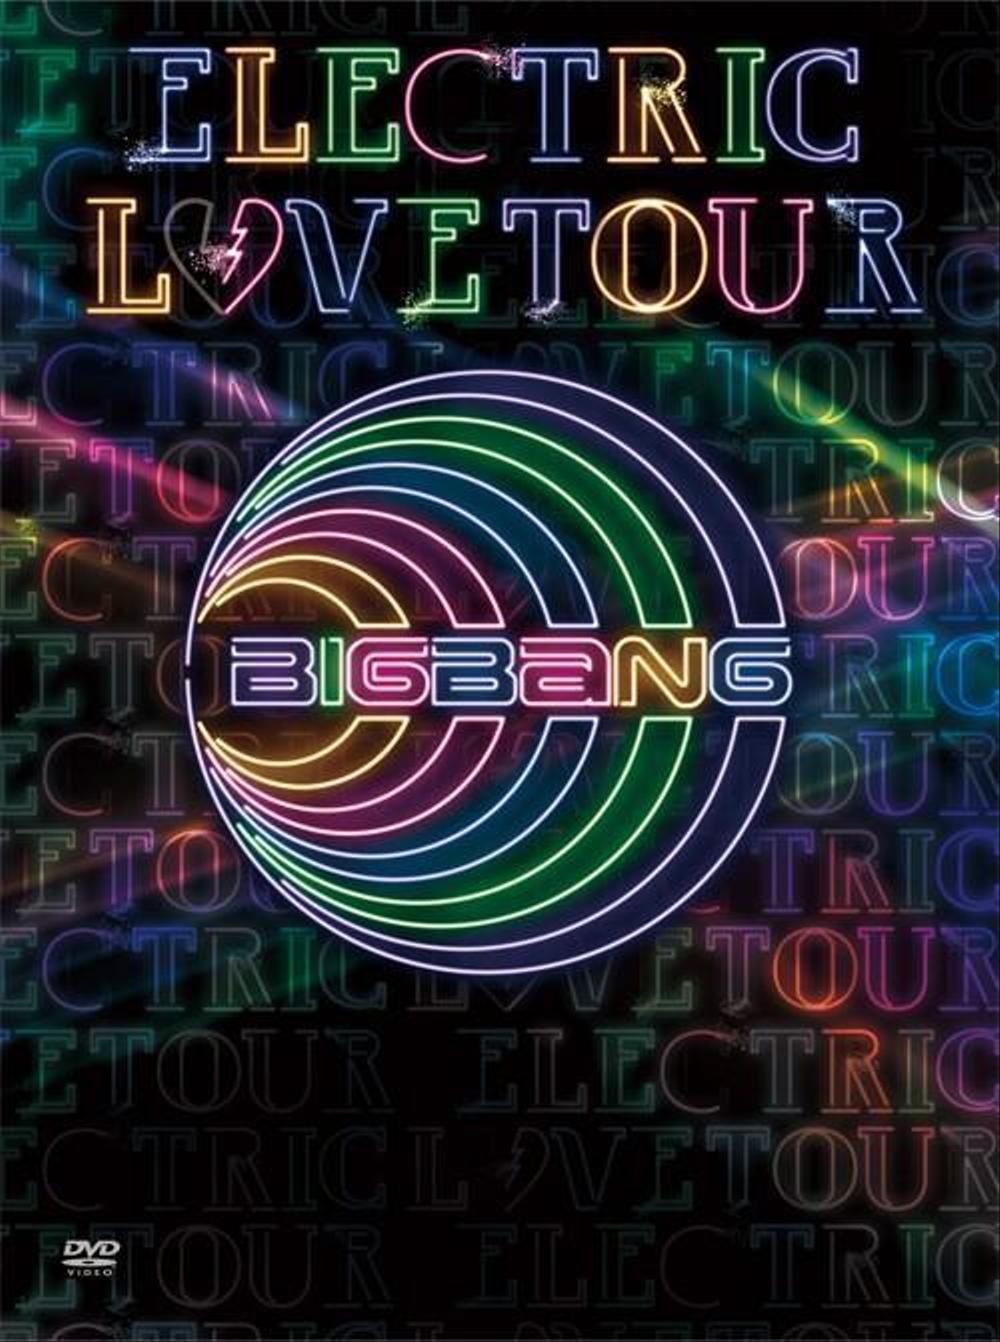 BIGBANG / ELECTRIC LOVE TOUR DVD